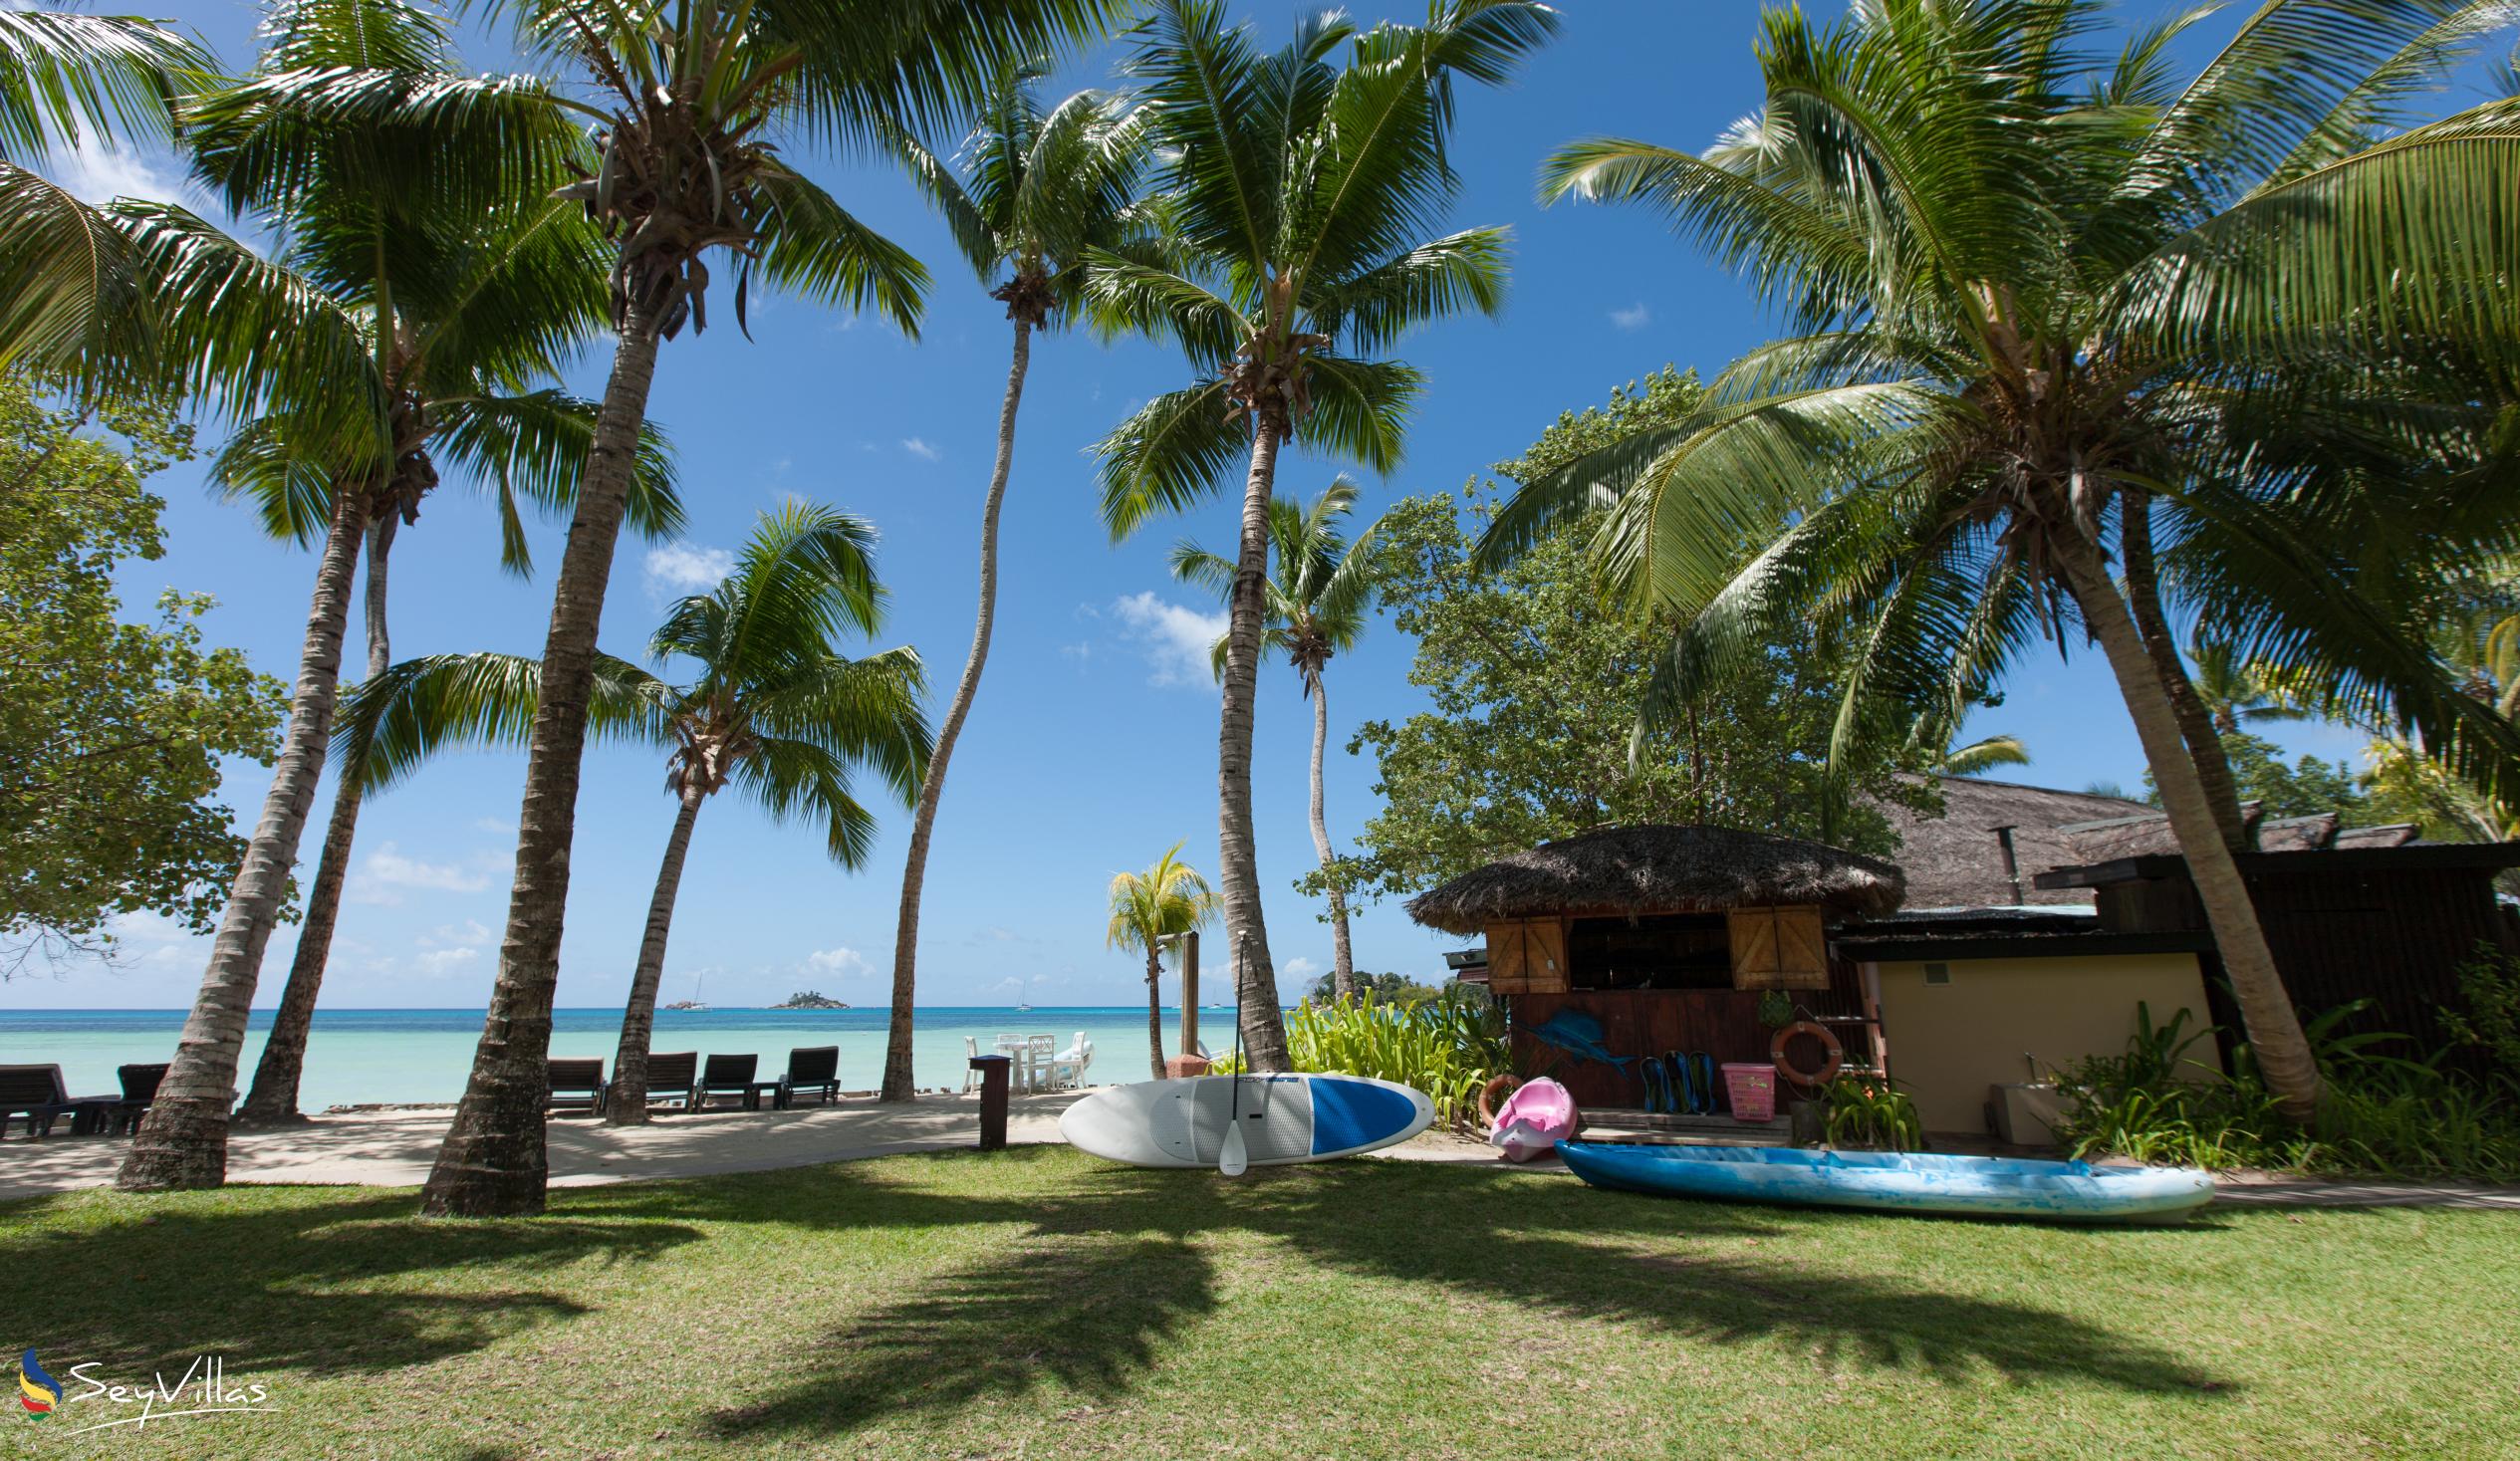 Foto 82: Paradise Sun Hotel - Lage - Praslin (Seychellen)